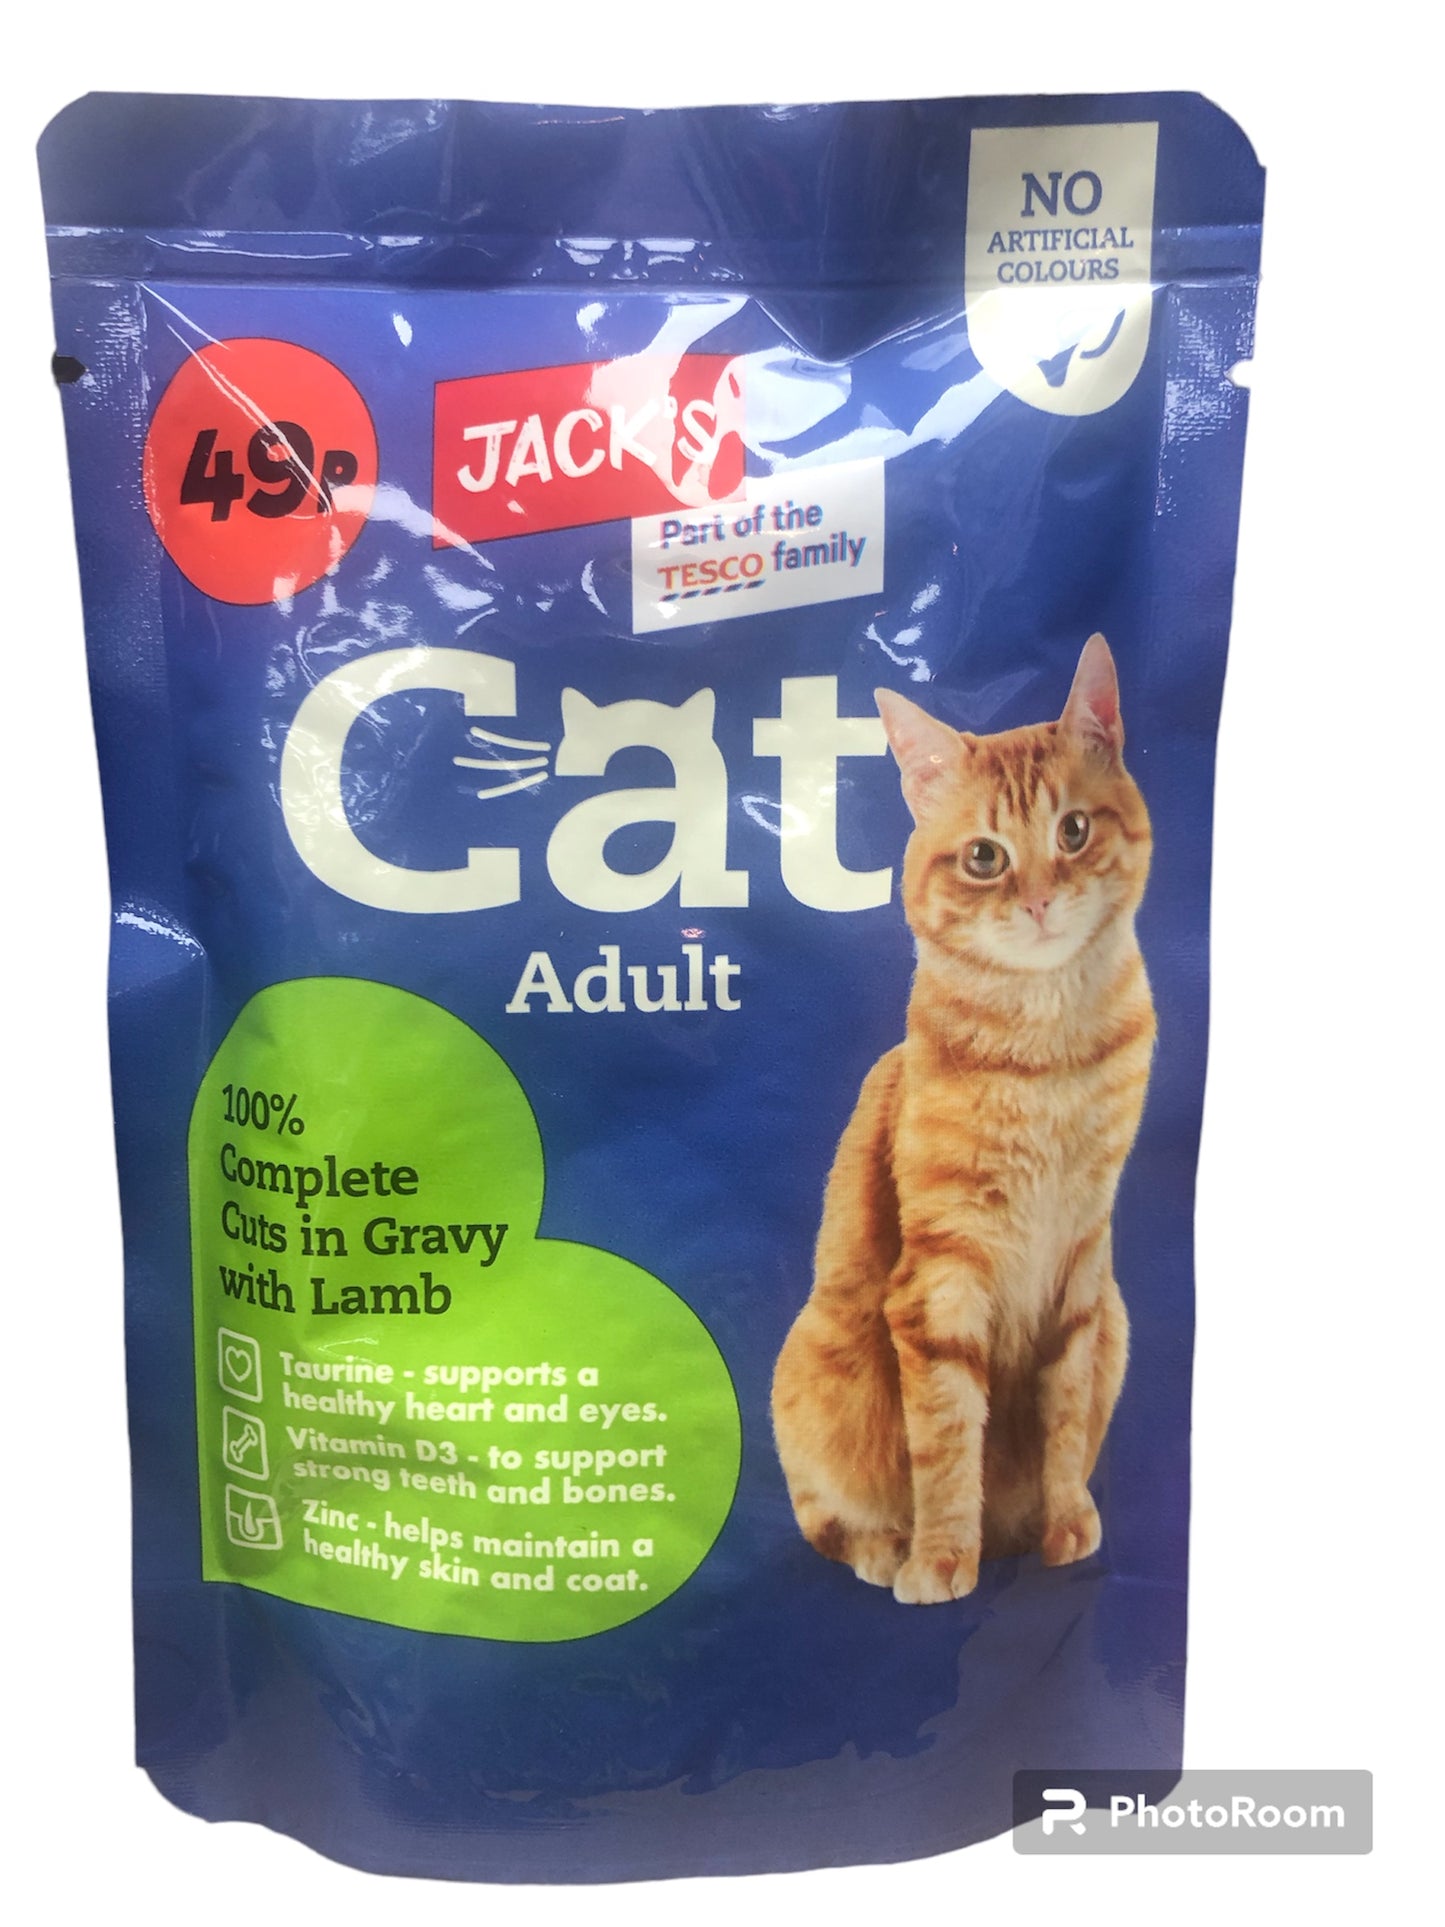 Jacks adult cat food 100% complete cuts in gravy 100g